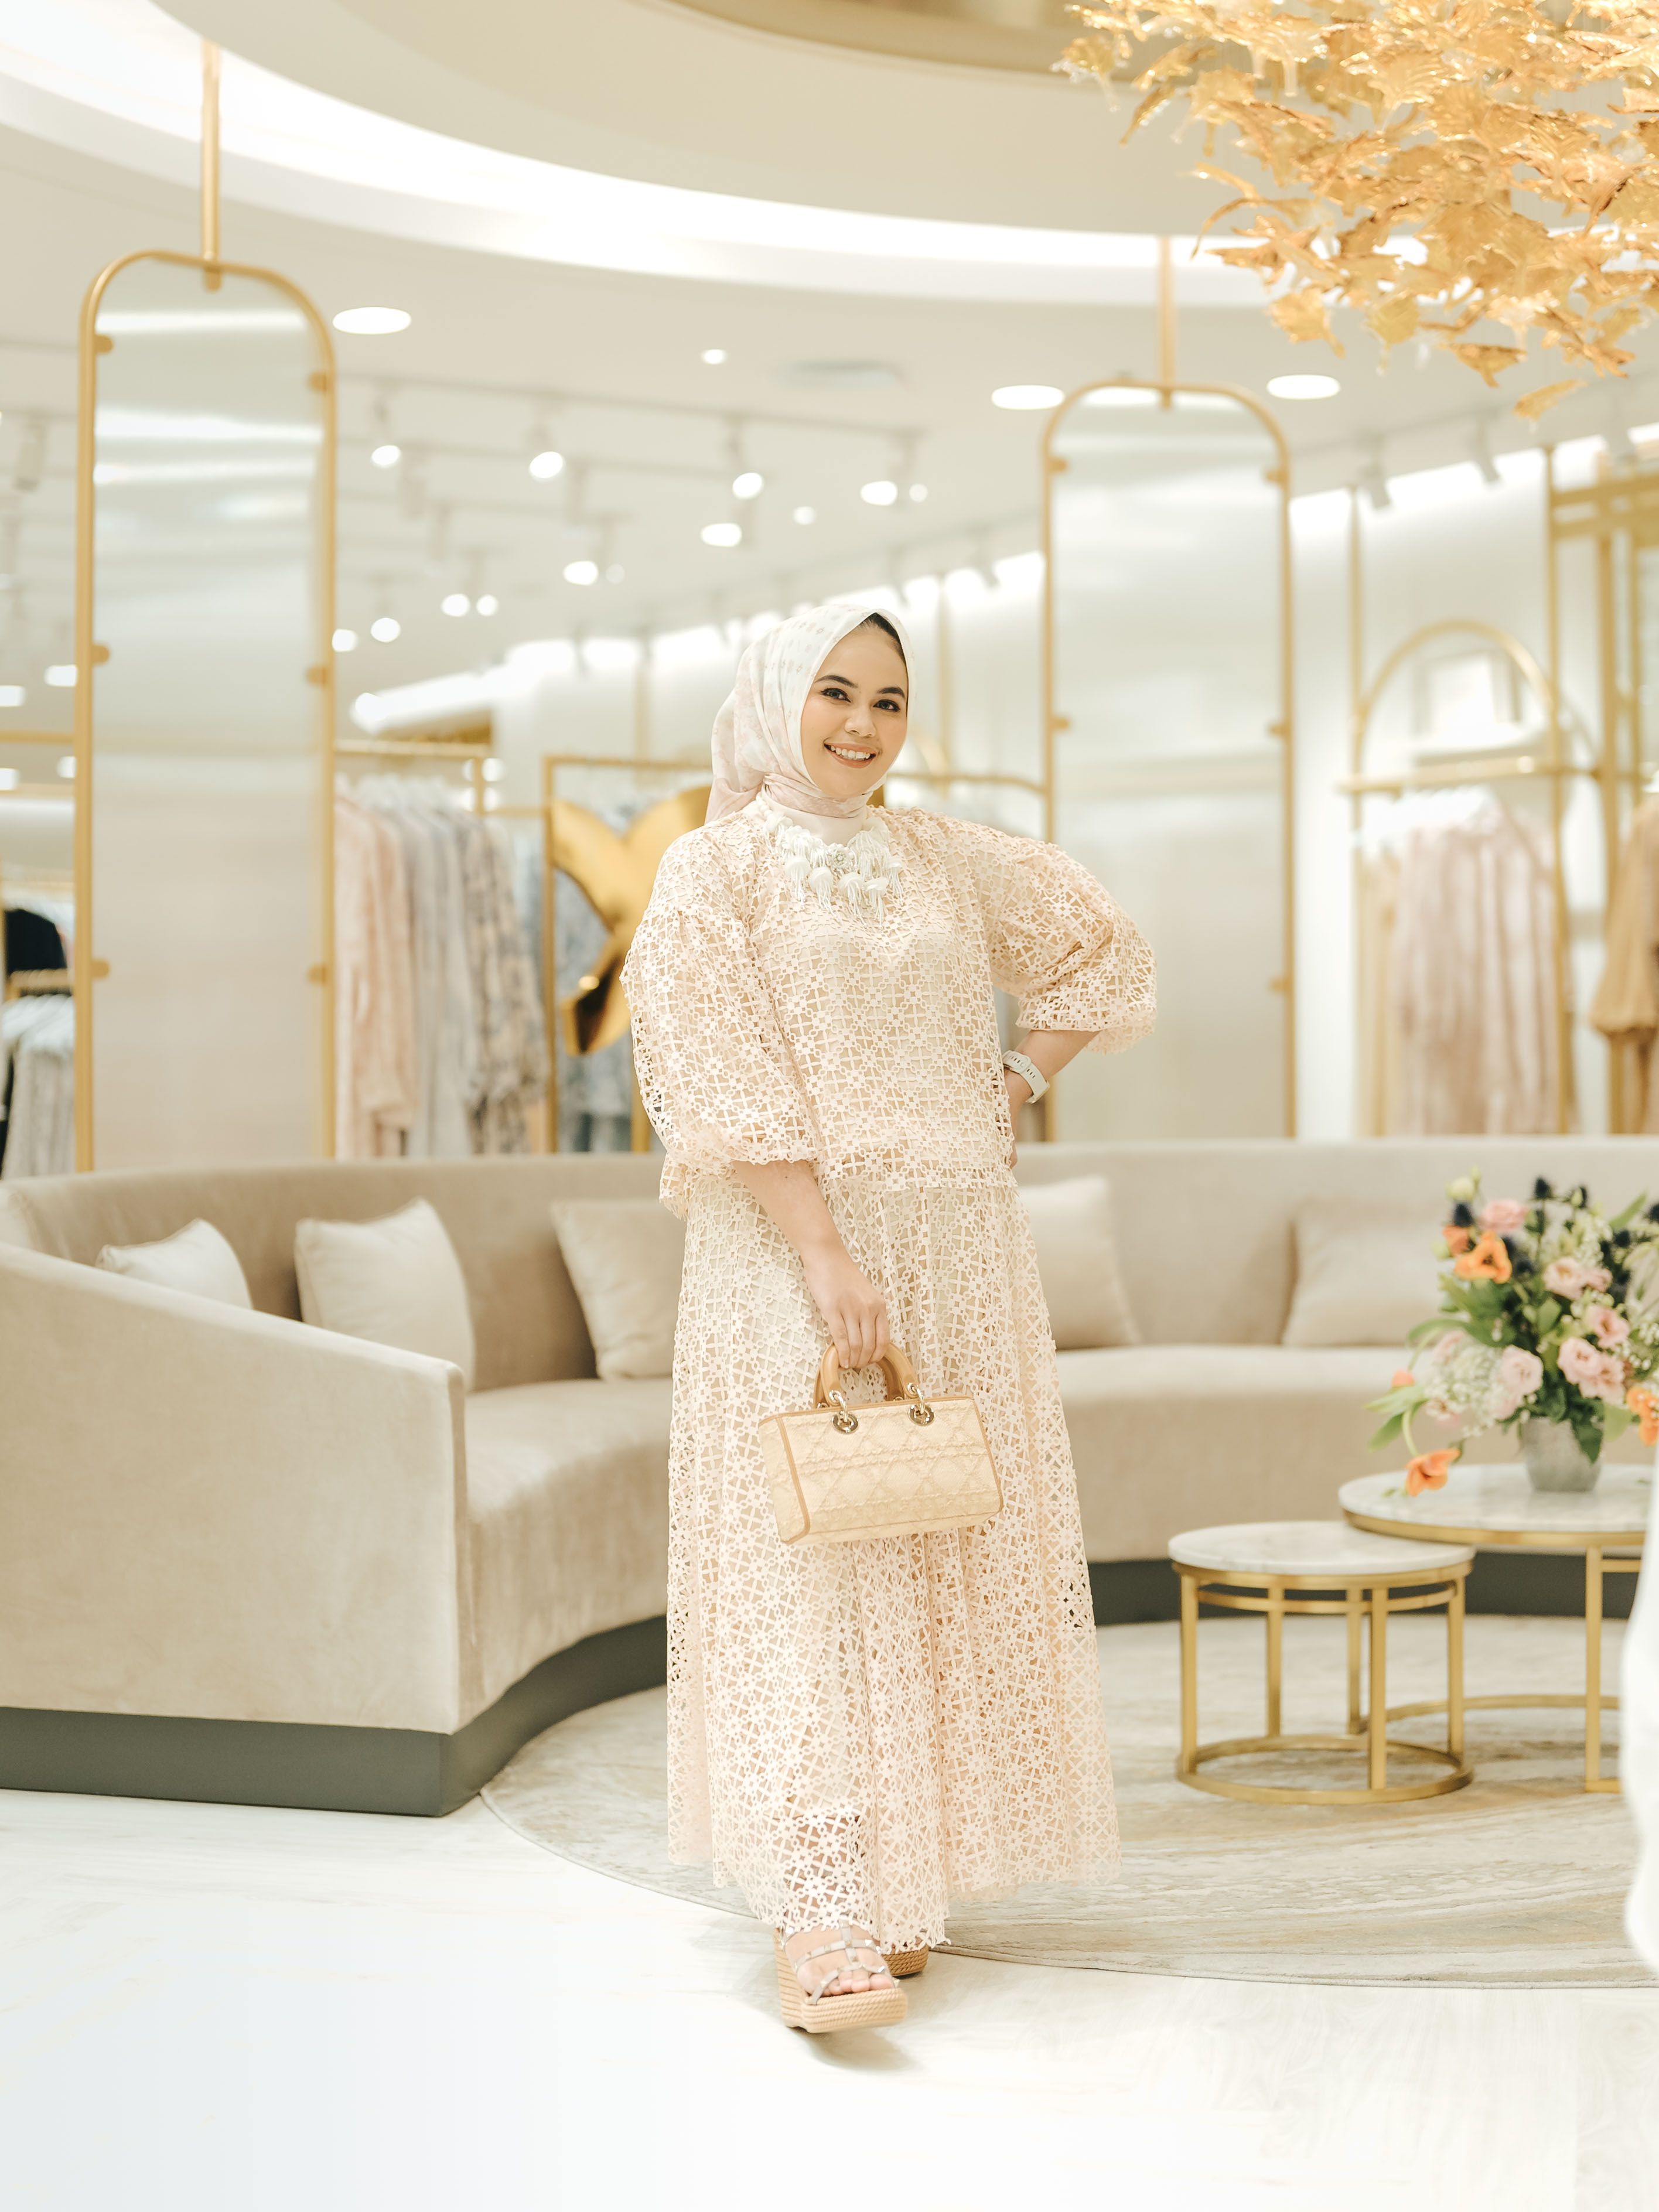 Klamby Buka Toko Modest Fashion Terbesar di Indonesia